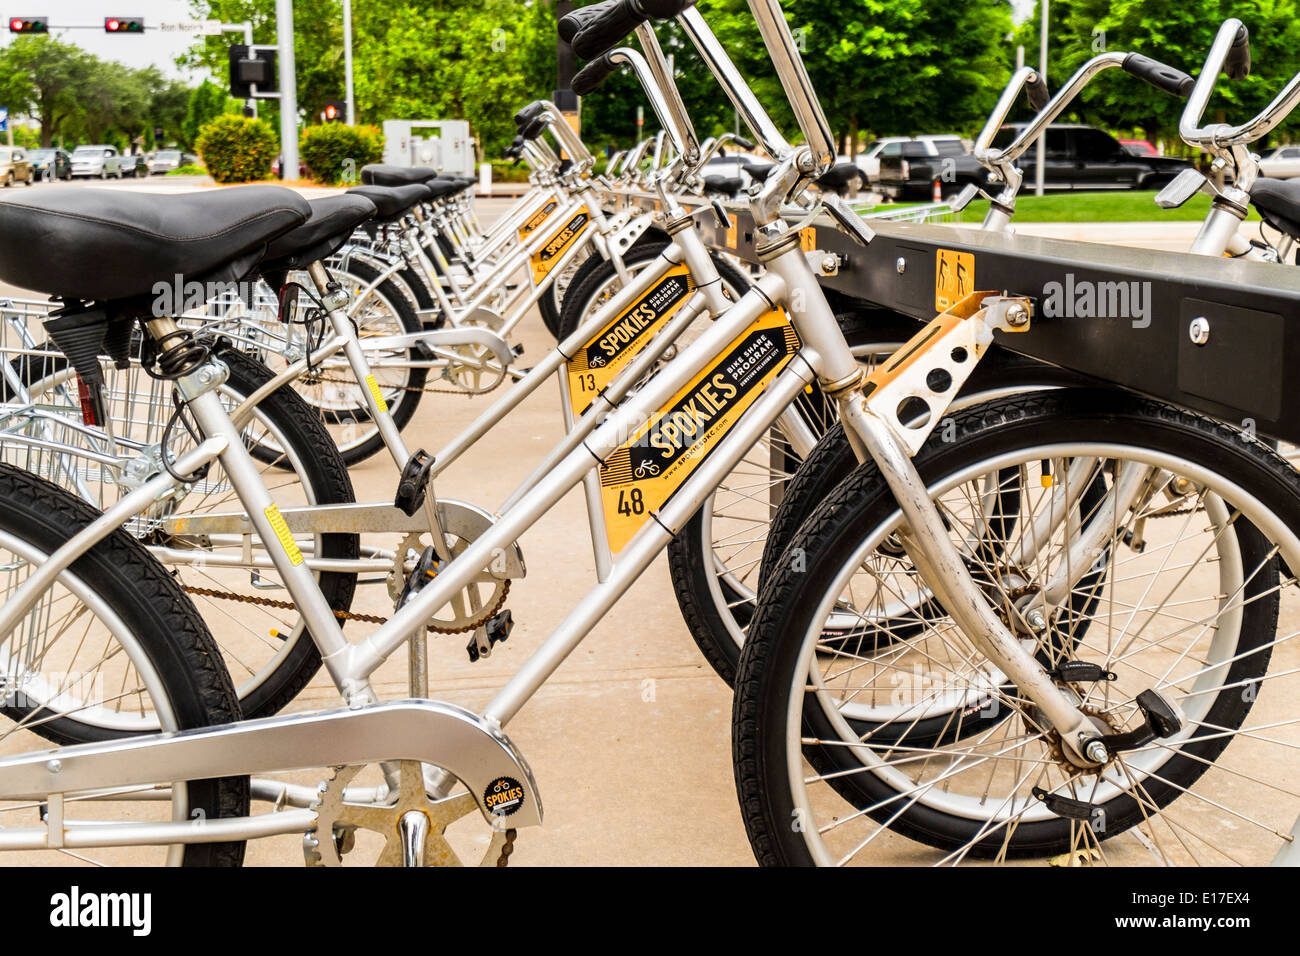 Fahrräder an Spokies, den Namen eines Fahrradverleih Programm in Oklahoma City, Oklahoma, USA, Stockfoto